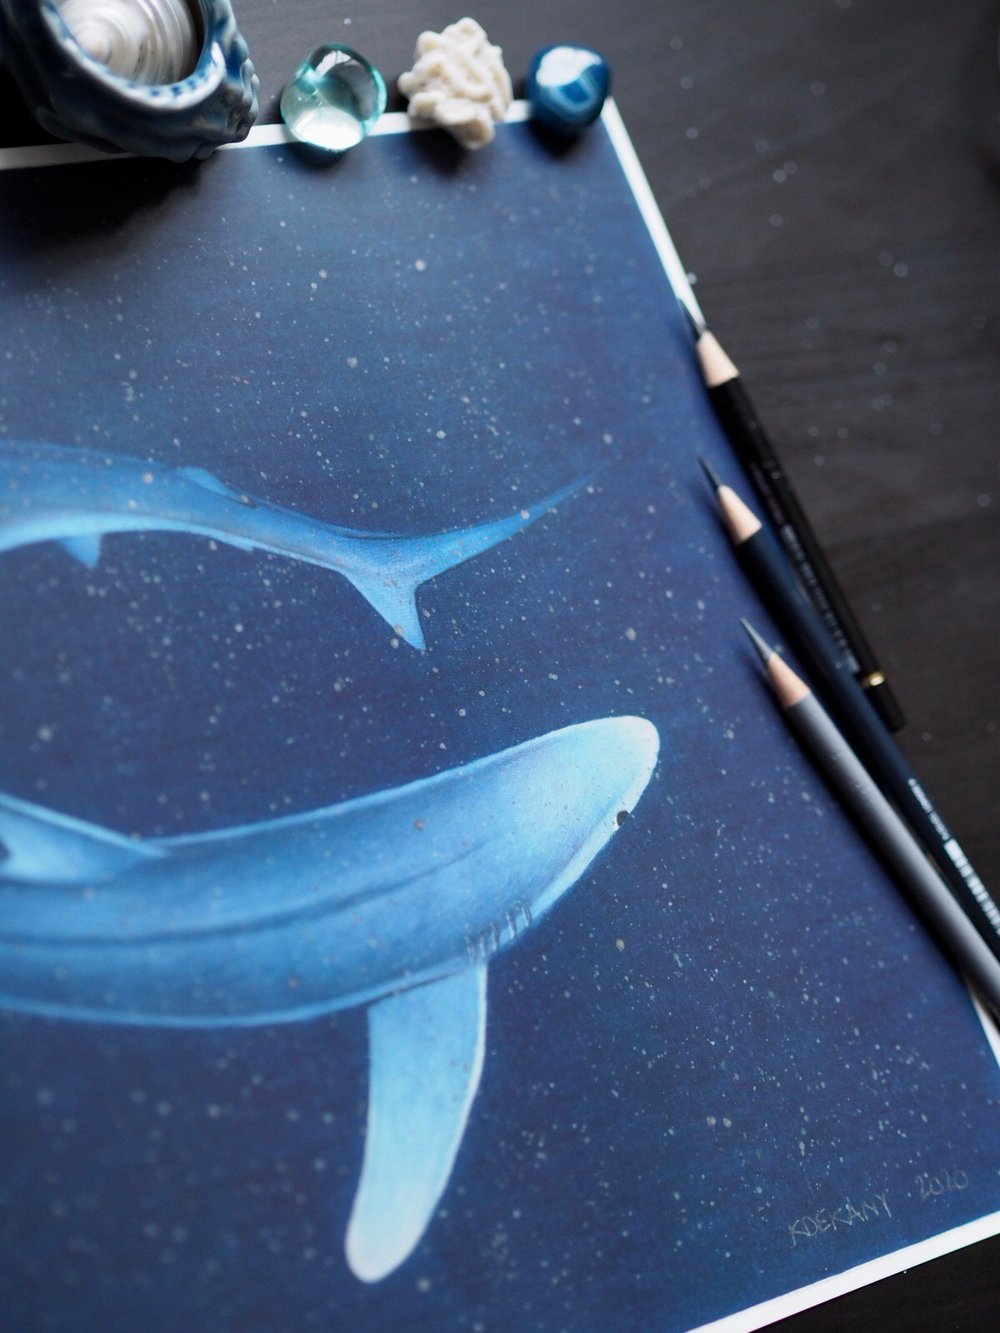 Image of Midnight Blues Dancing Blue Sharks Fine Art Print